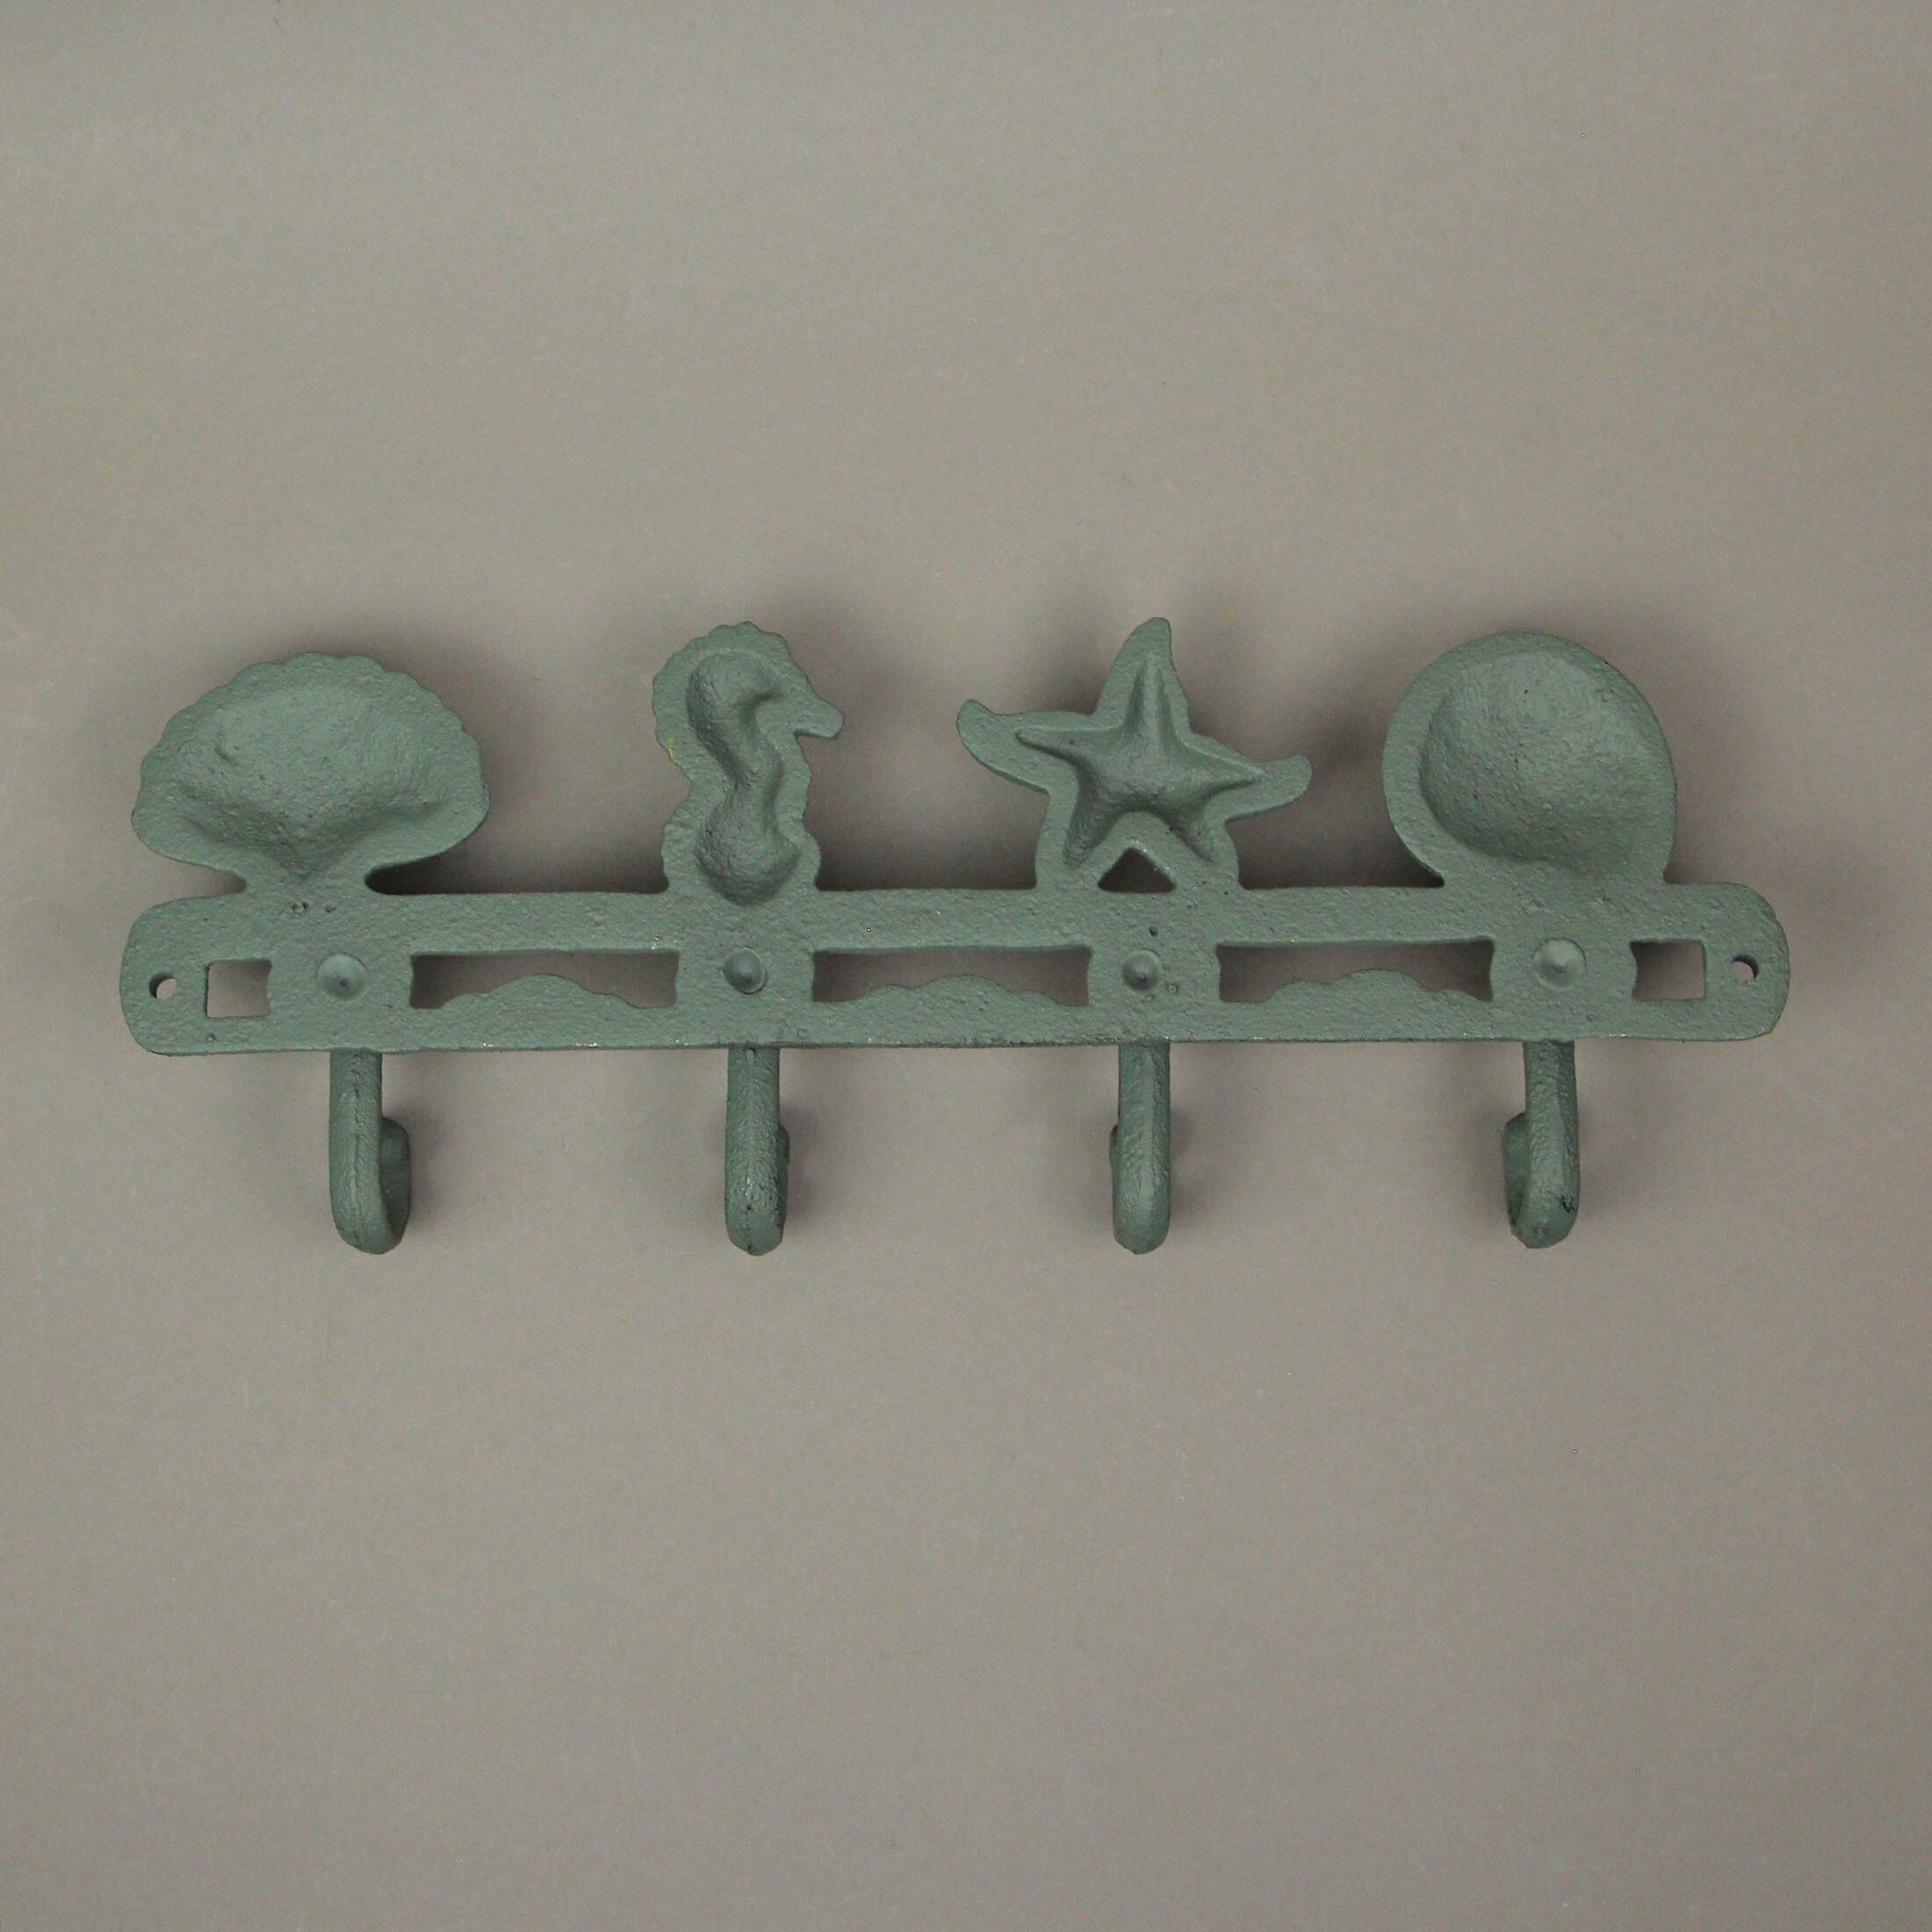 Zeckos Bronze Cast Iron Octopus Tentacle Wall Hook (Set of 3)